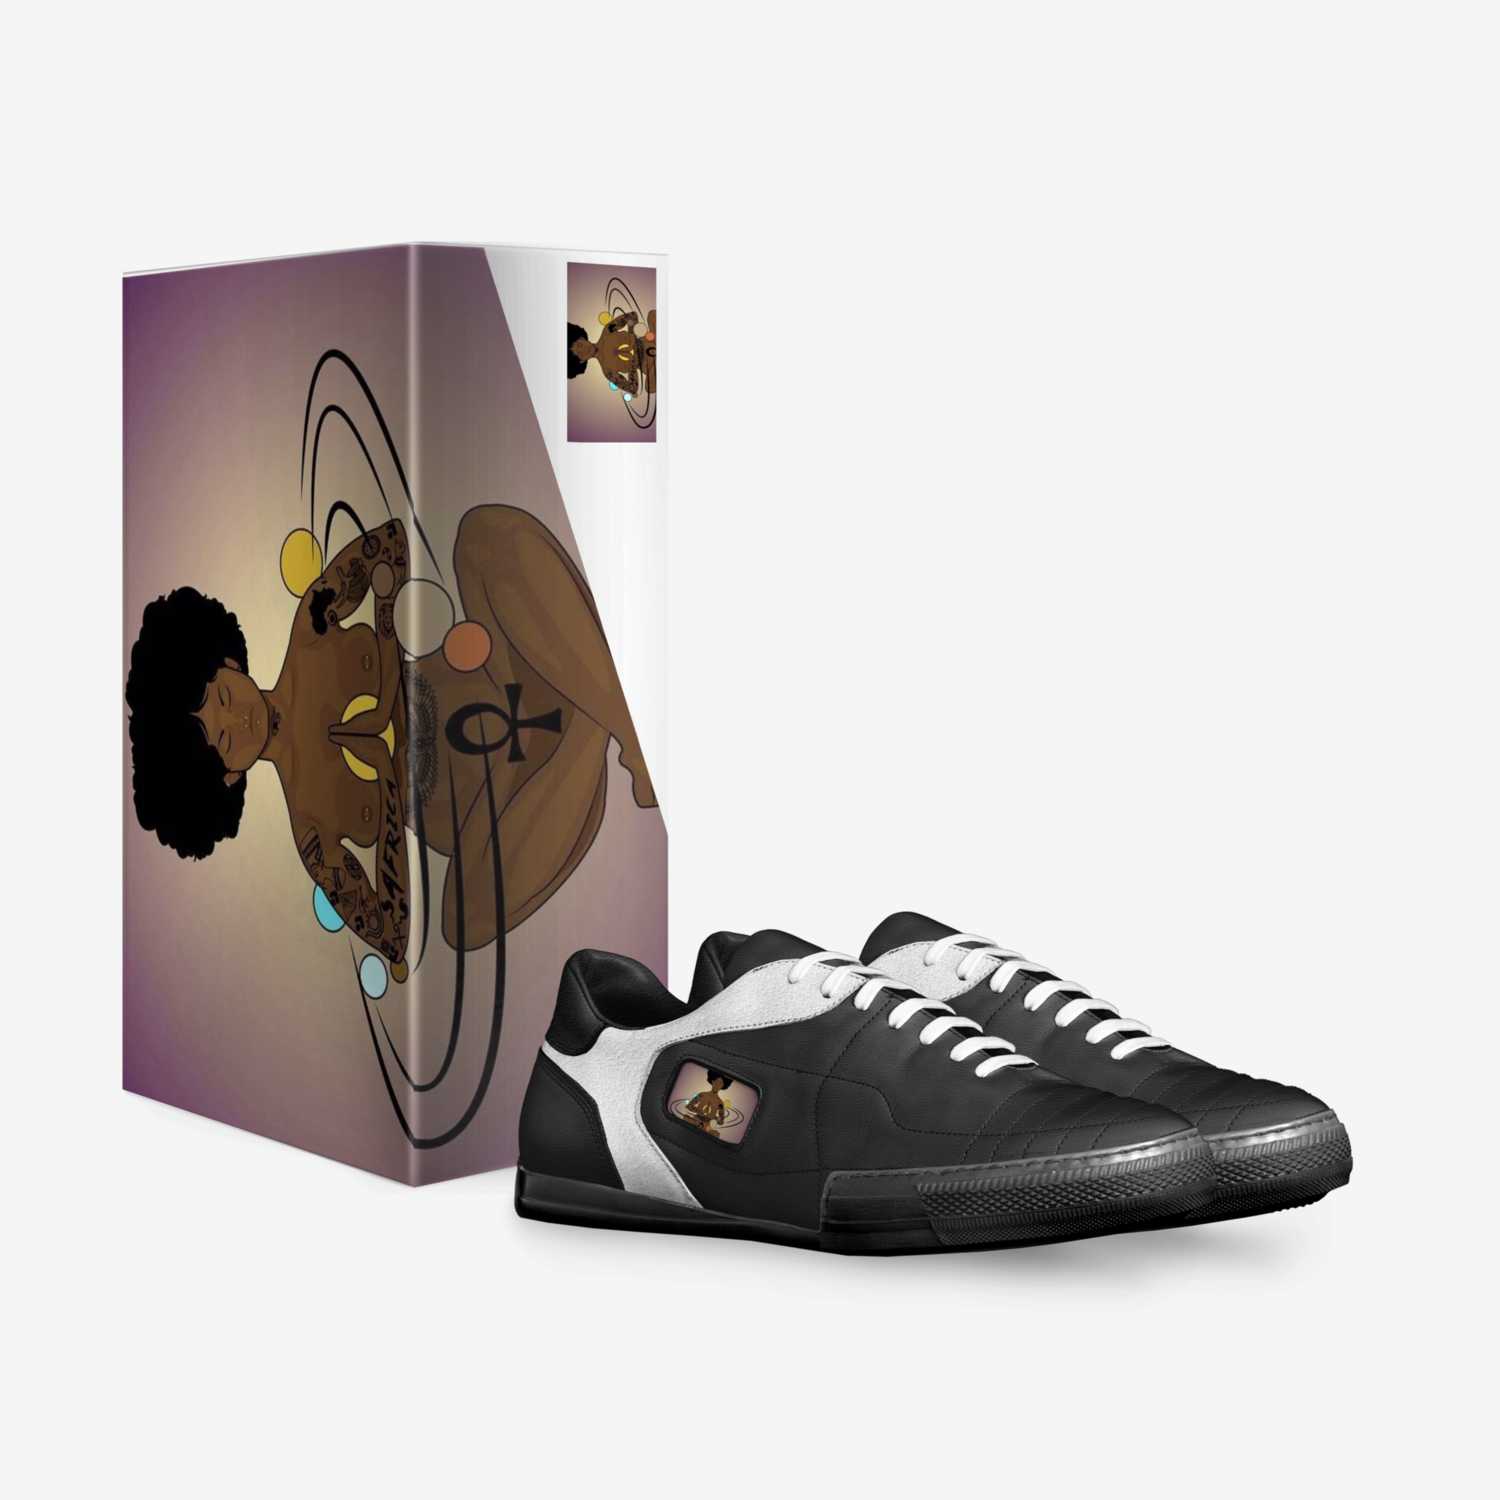 Indigenous v custom made in Italy shoes by Adeyemi Damba | Box view